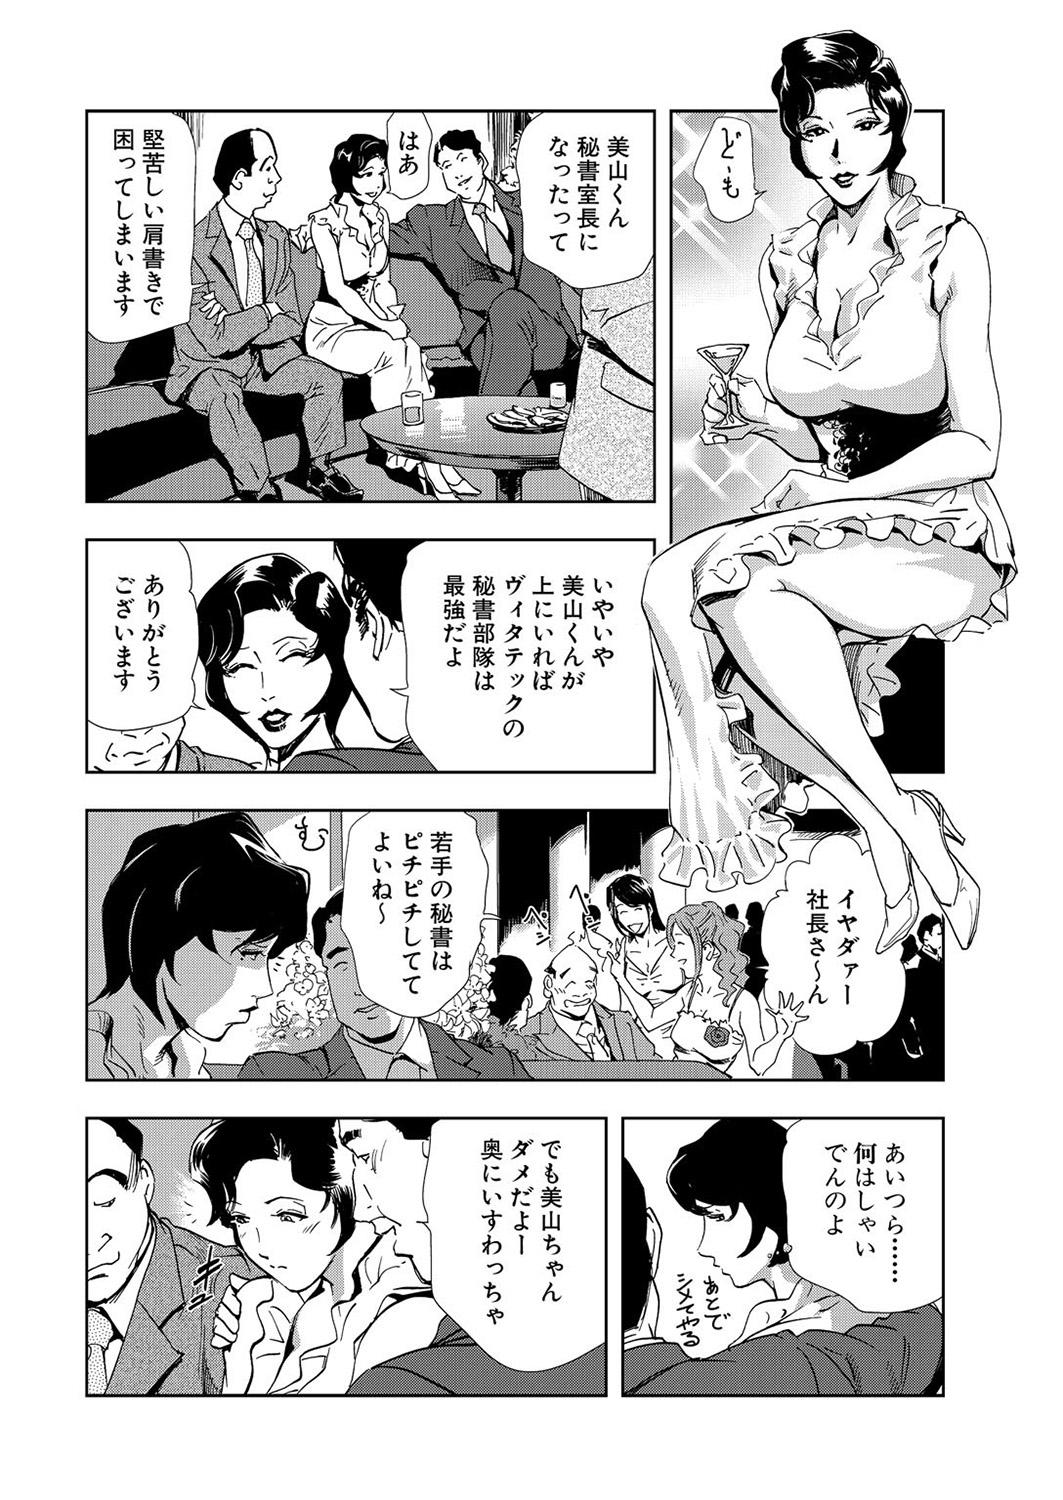 Slapping Nikuhisyo Yukiko 7 Step Fantasy - Page 6